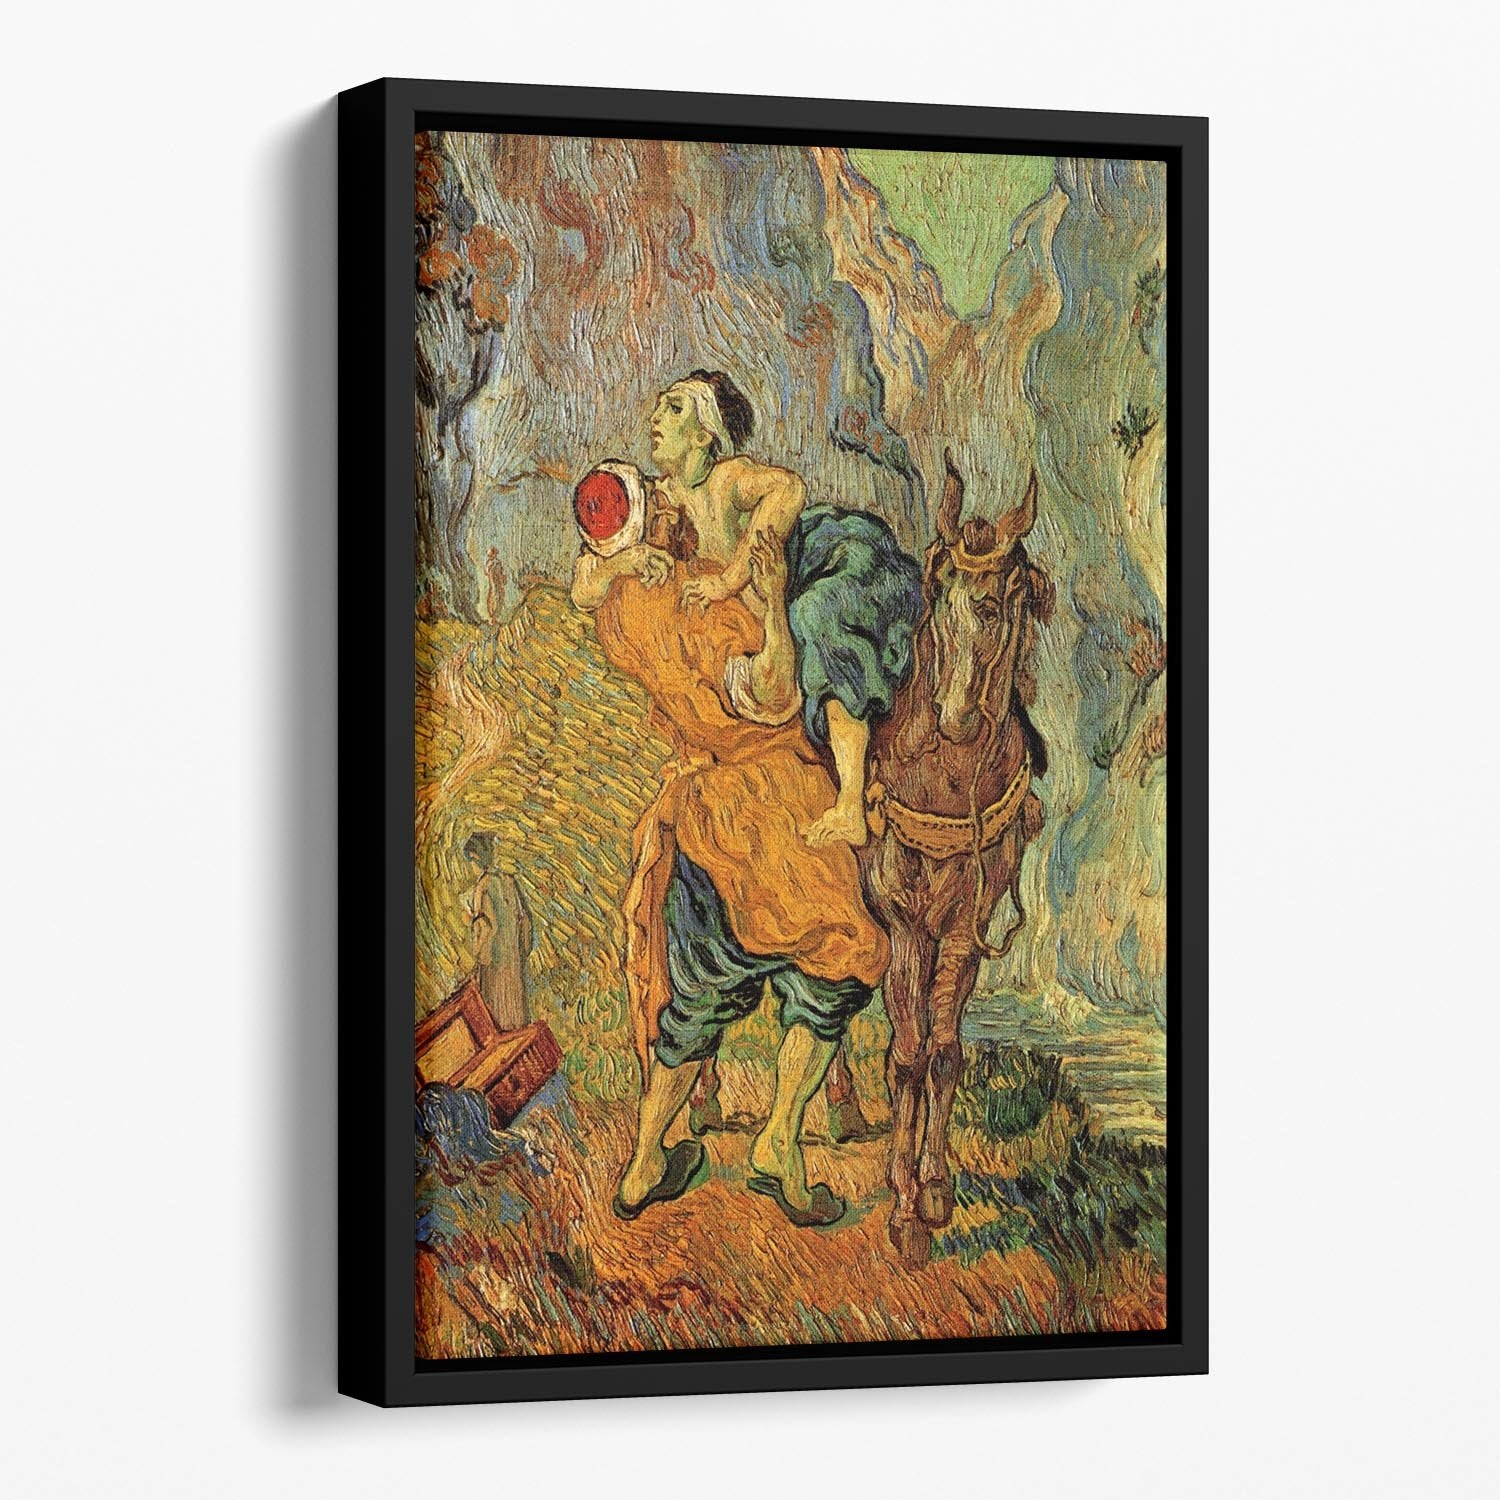 The Good Samaritan after Delacroix by Van Gogh Floating Framed Canvas